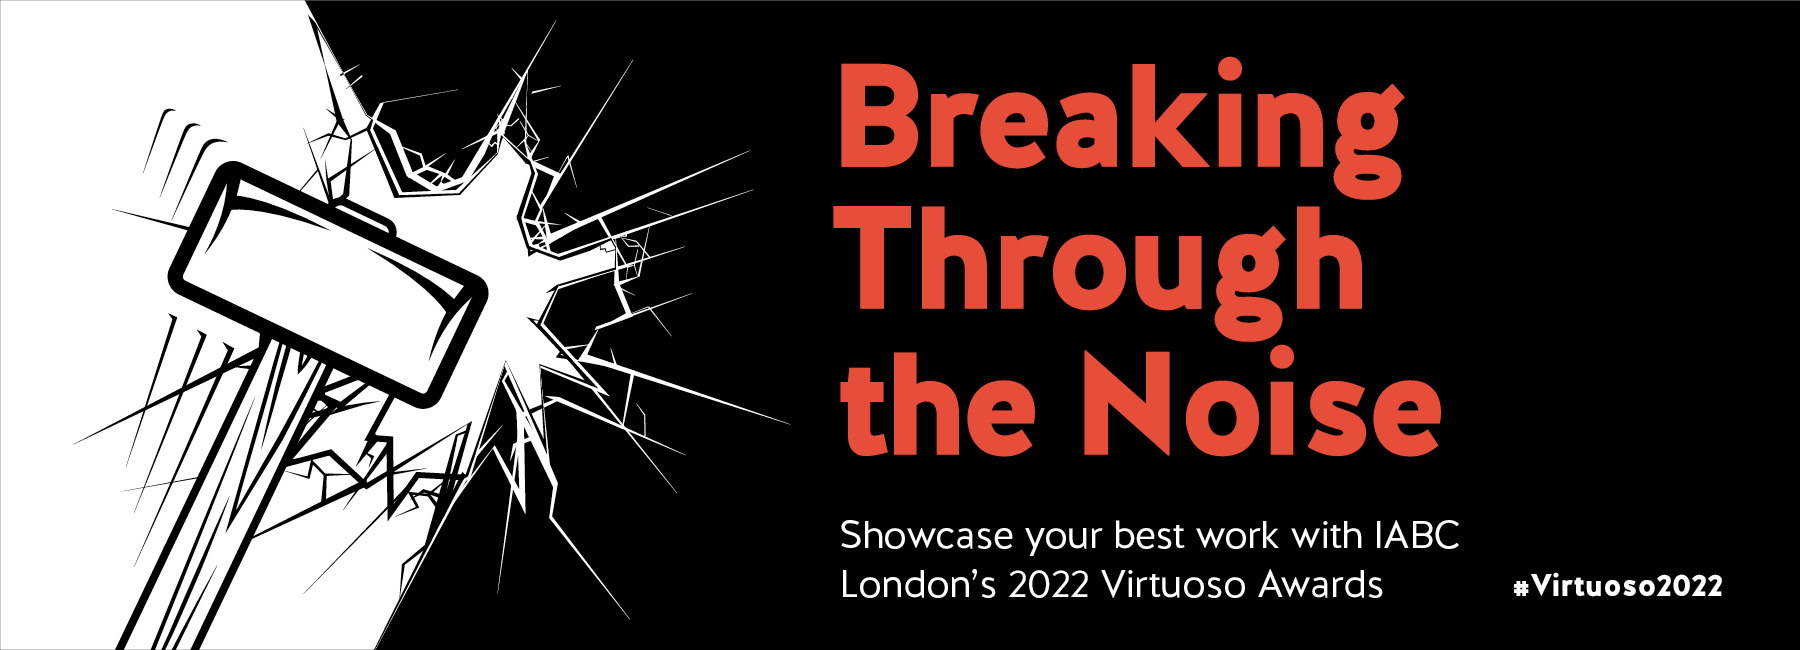 Breaking through the noise. Showcase your best work with IABC London's 2022 Virtuoso Awards. #Virtuoso2022